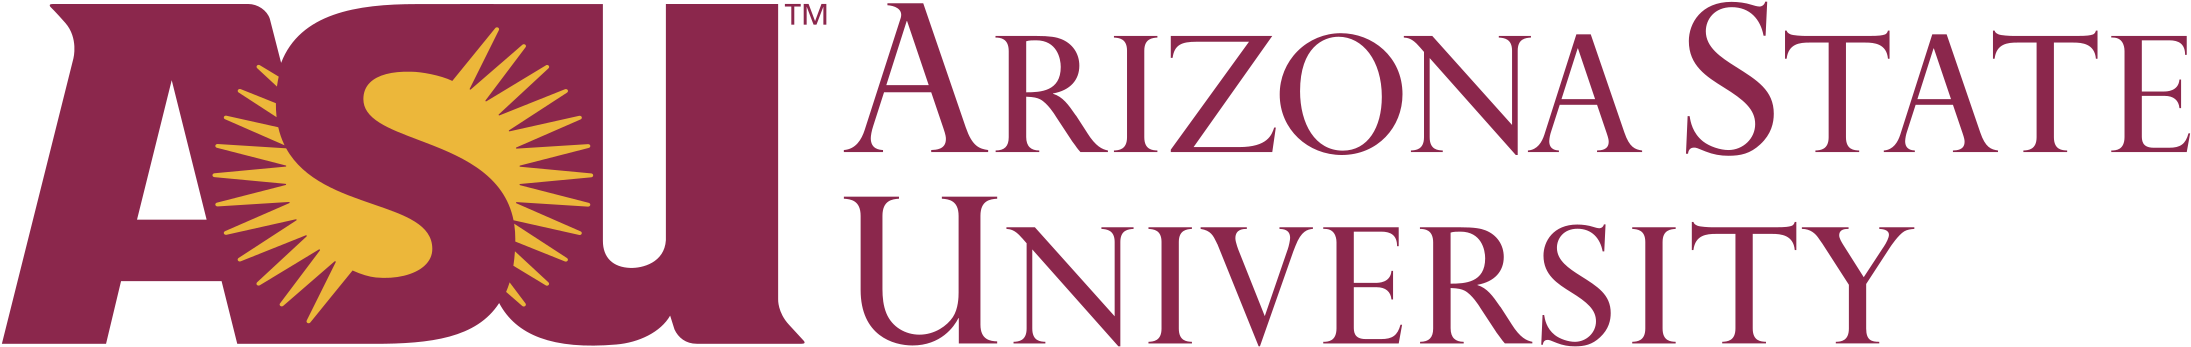 Arizona State University Logo PNG image